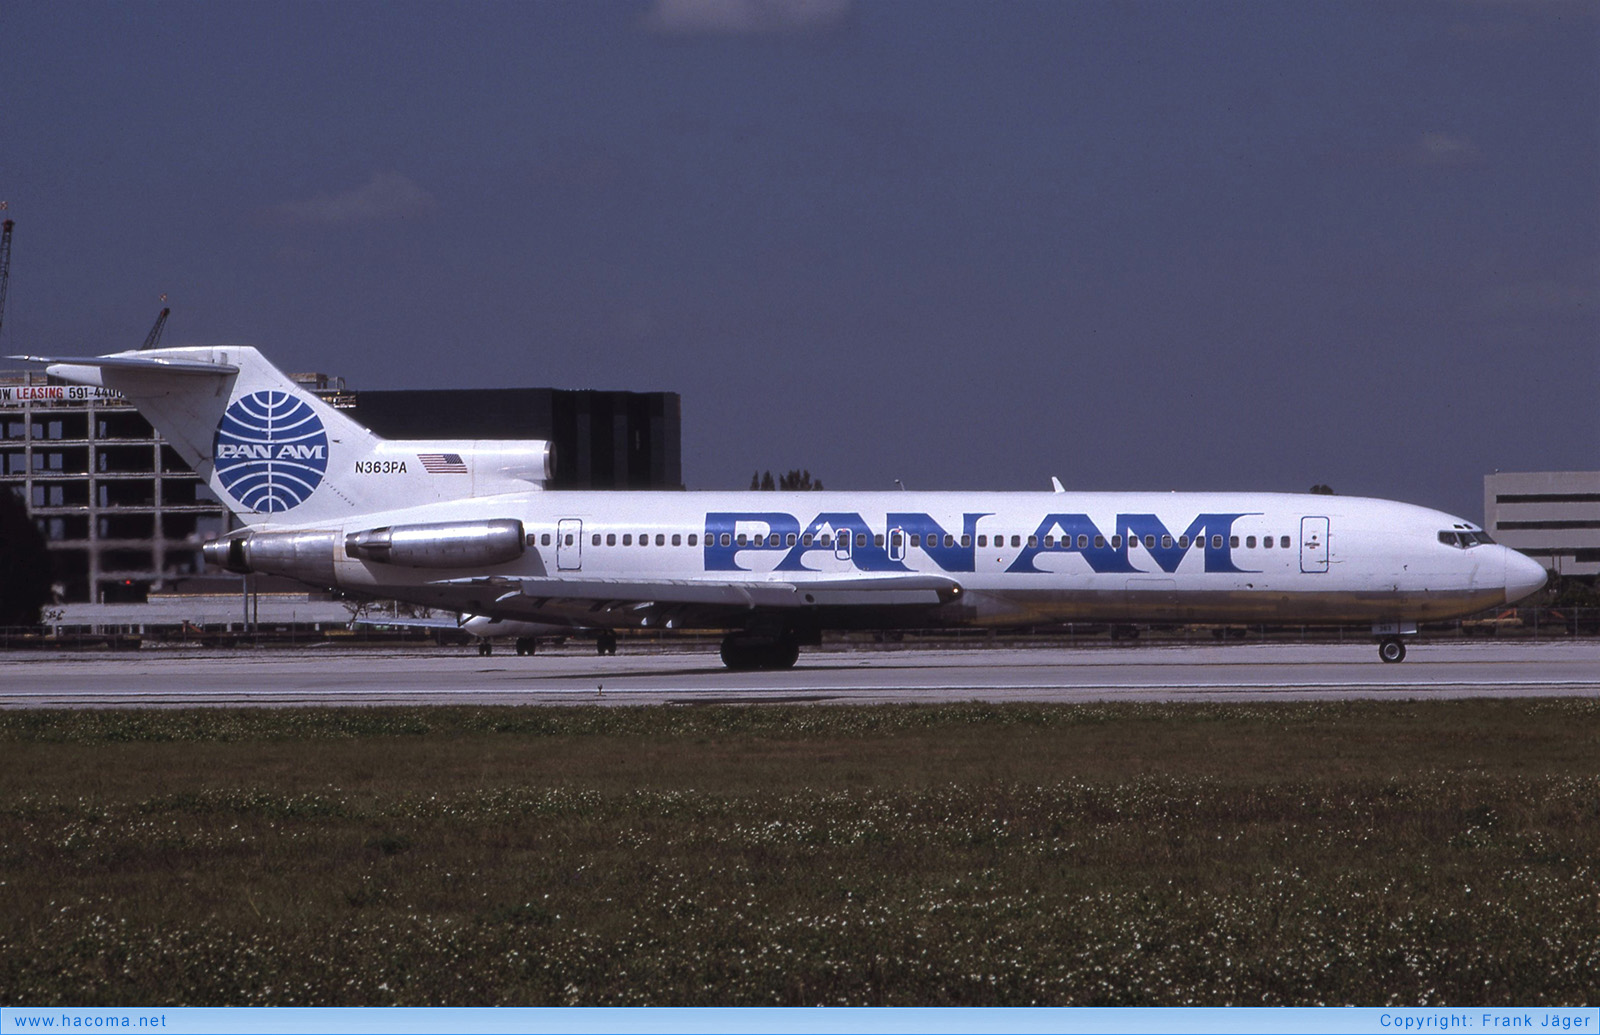 Foto von N363PA - Pan Am Clipper Racer - Miami International Airport - 10.02.1987